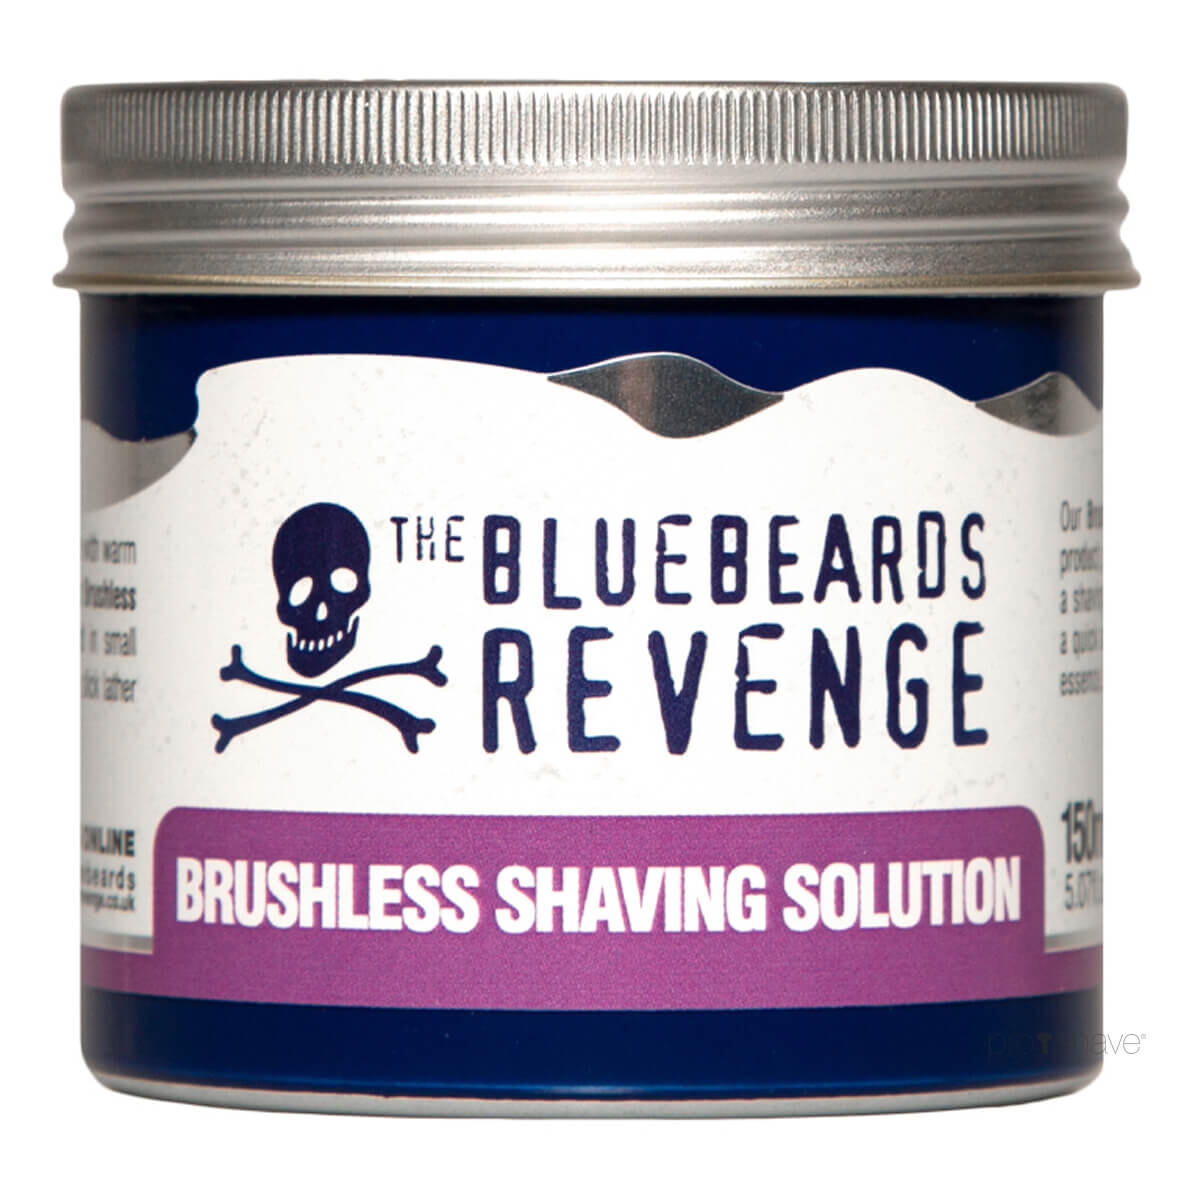 Billede af Bluebeards Revenge Shaving Solution, Brushless, 150 ml.